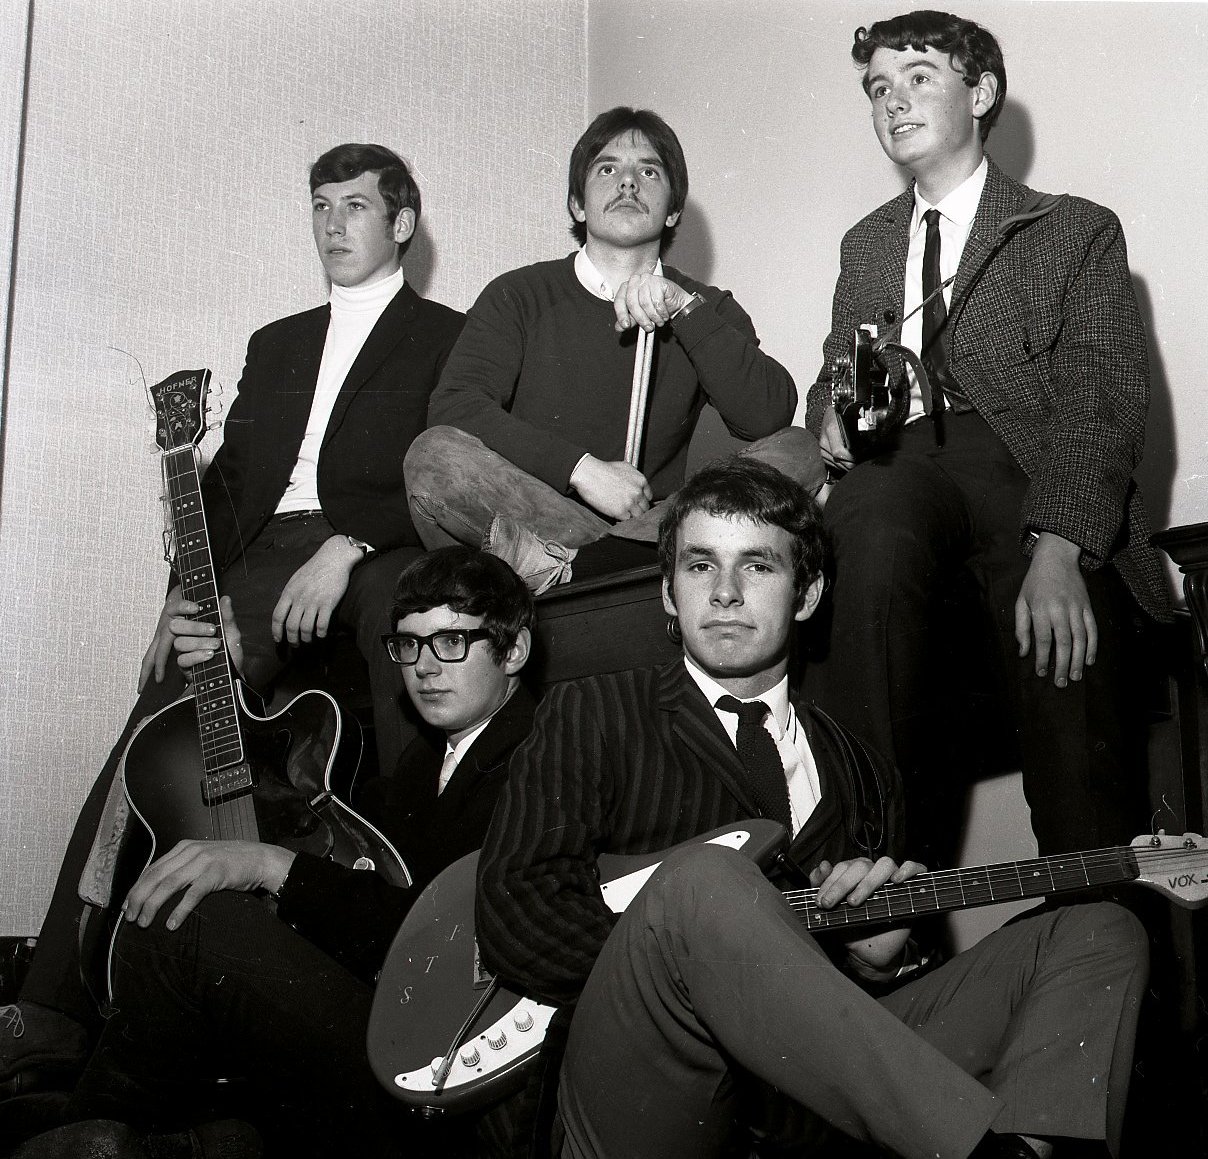 Were you a fan? Wrexham beat band Opposition, 1967.